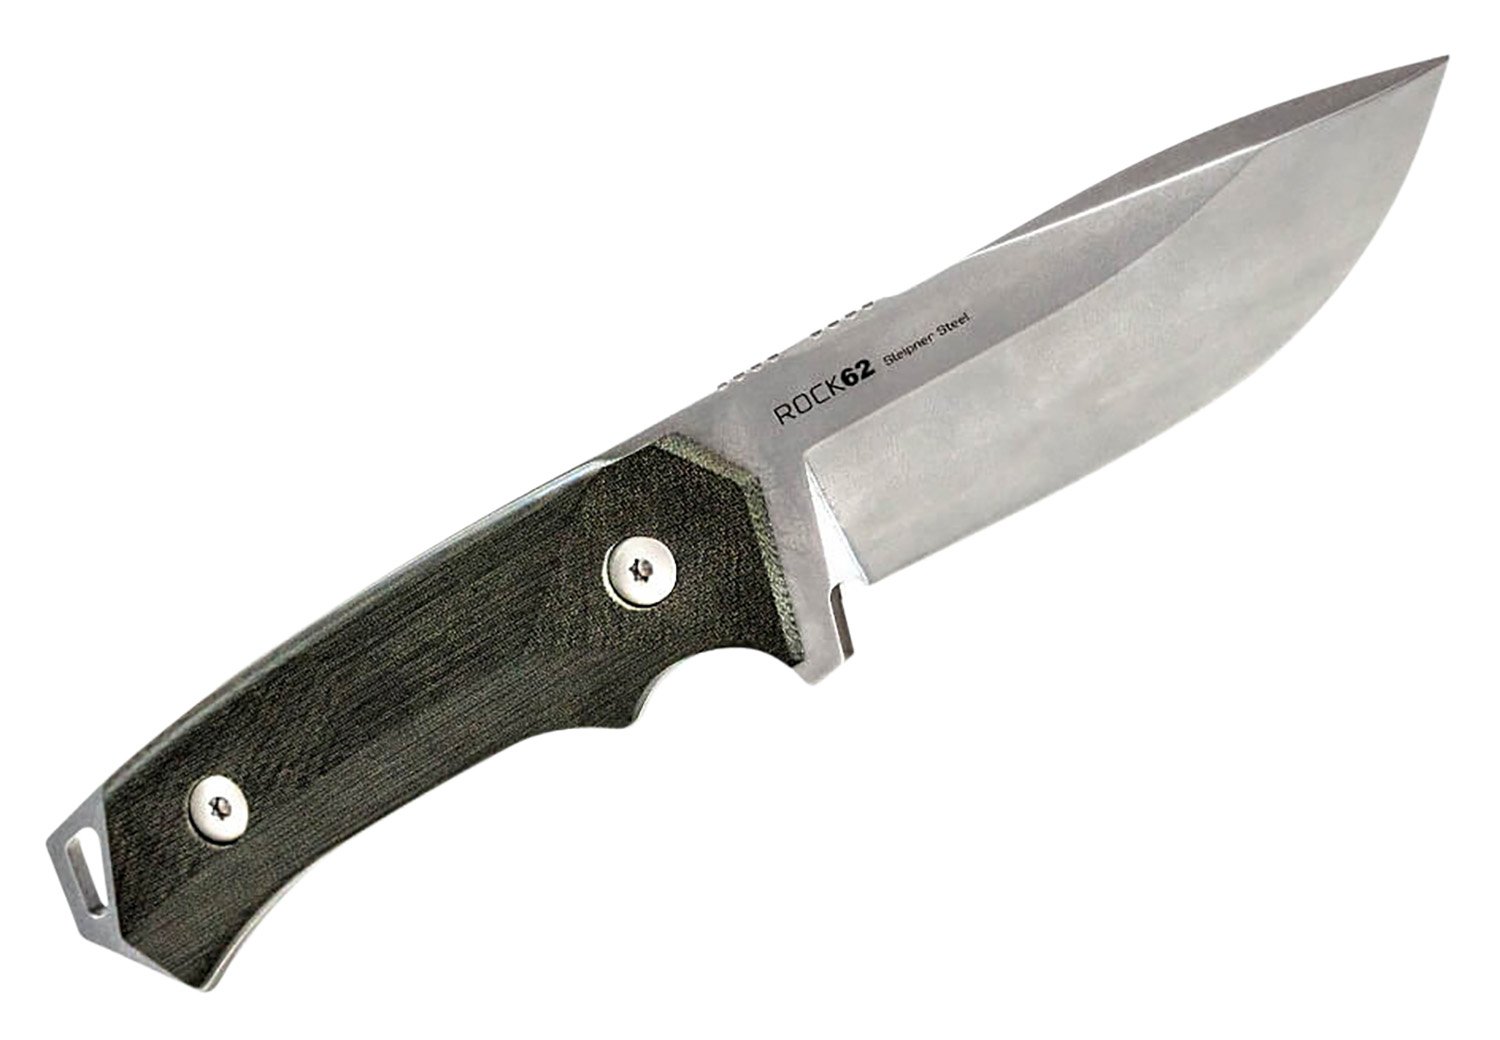 WOOX KNIFE ROCK 62 FIXED BLADE 4.25